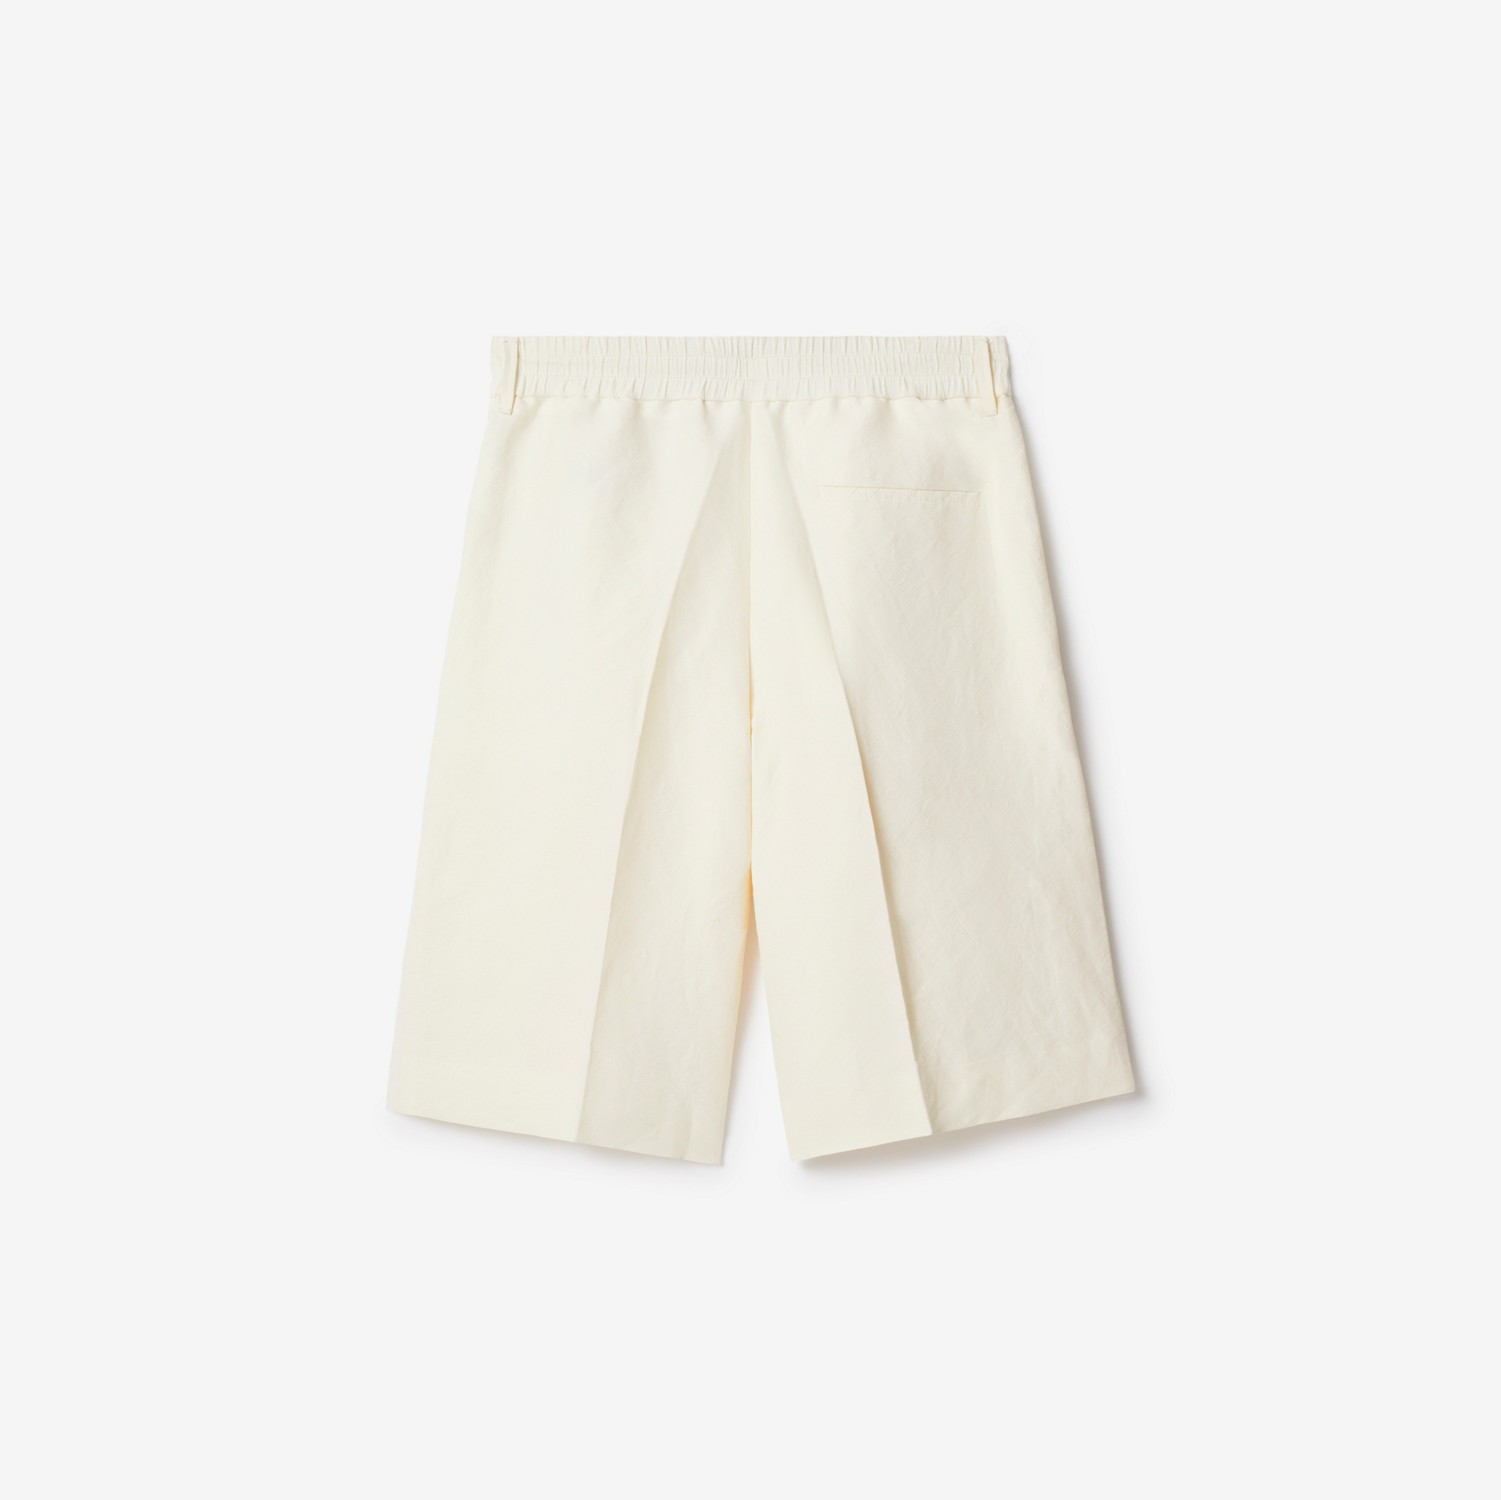 Elegante Canvas-Shorts